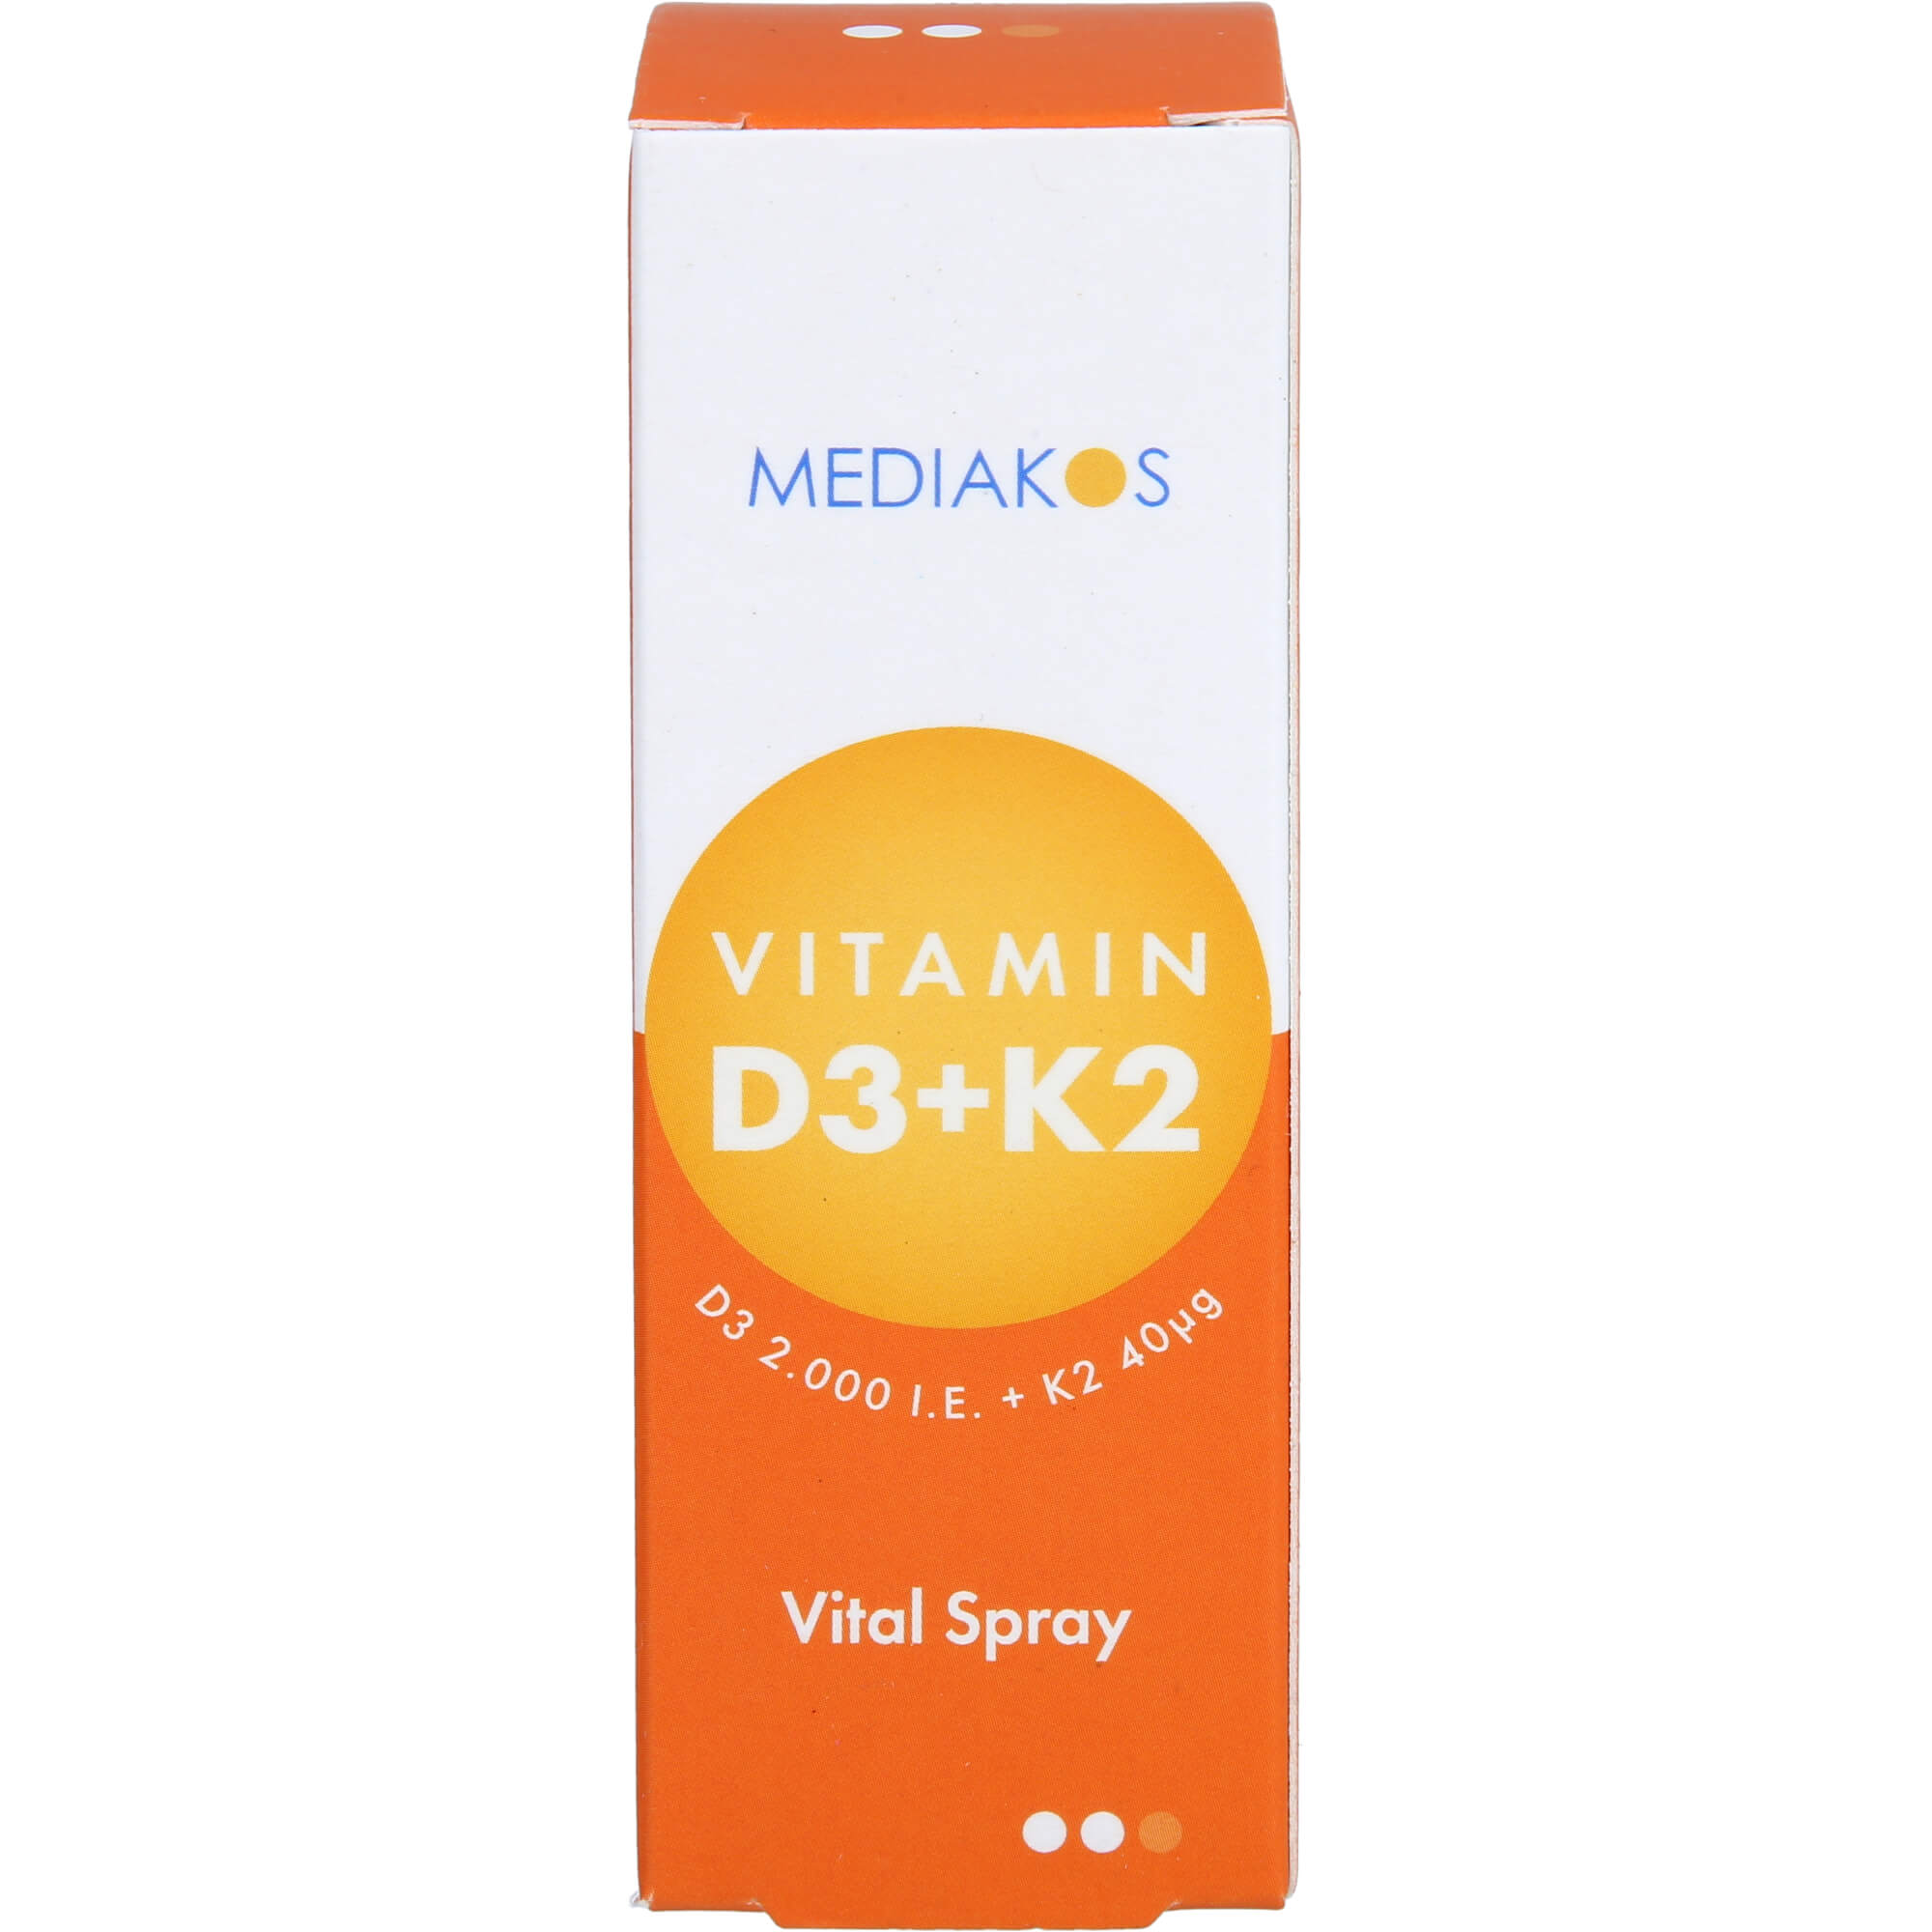 VITAMIN D3+K2 2000 I.E. 40 µg Mediakos Vital Spray